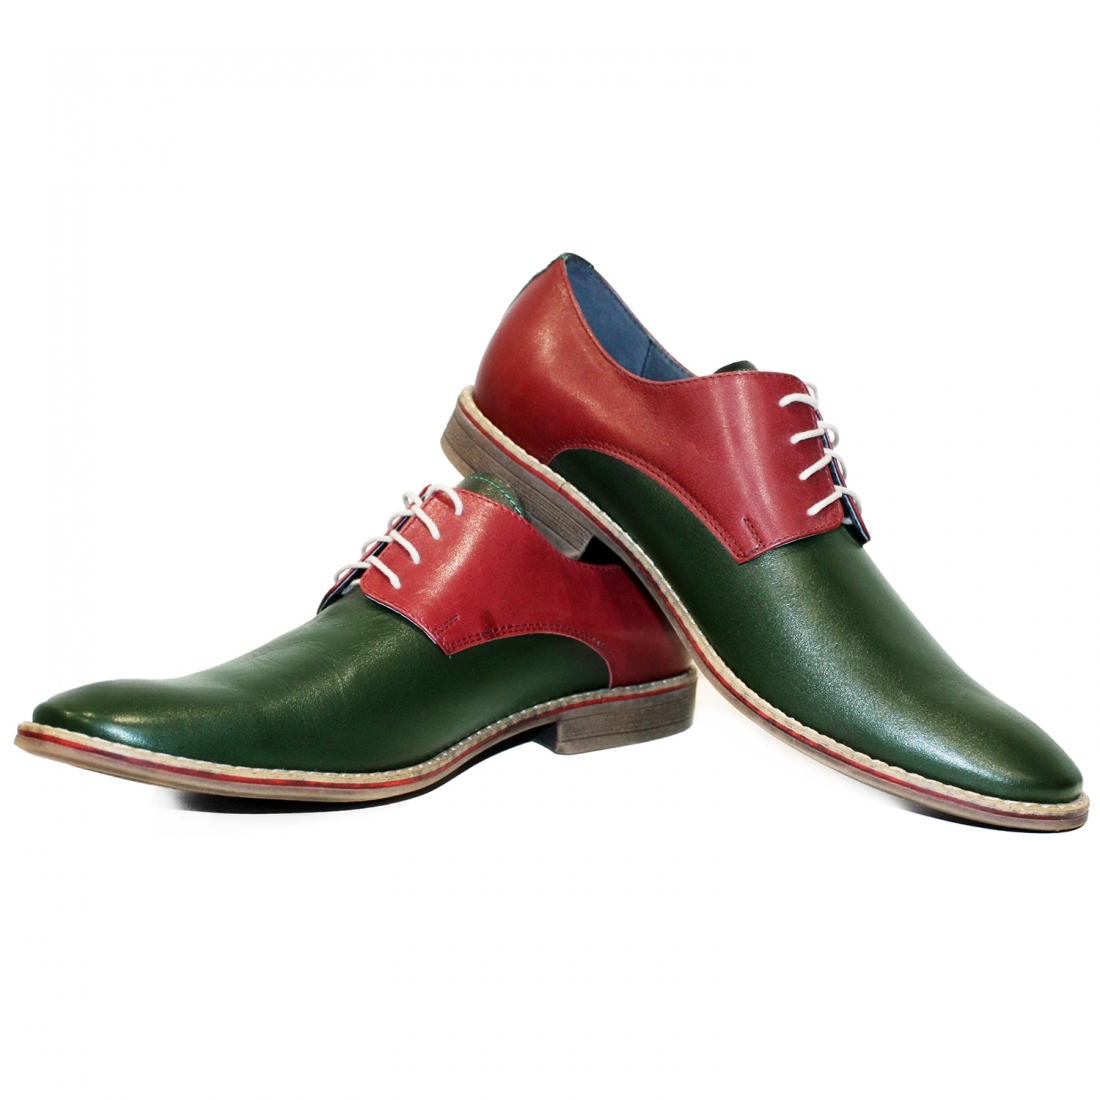 Modello Huterso - Zapatos Clásicos - Handmade Colorful Italian Leather Shoes